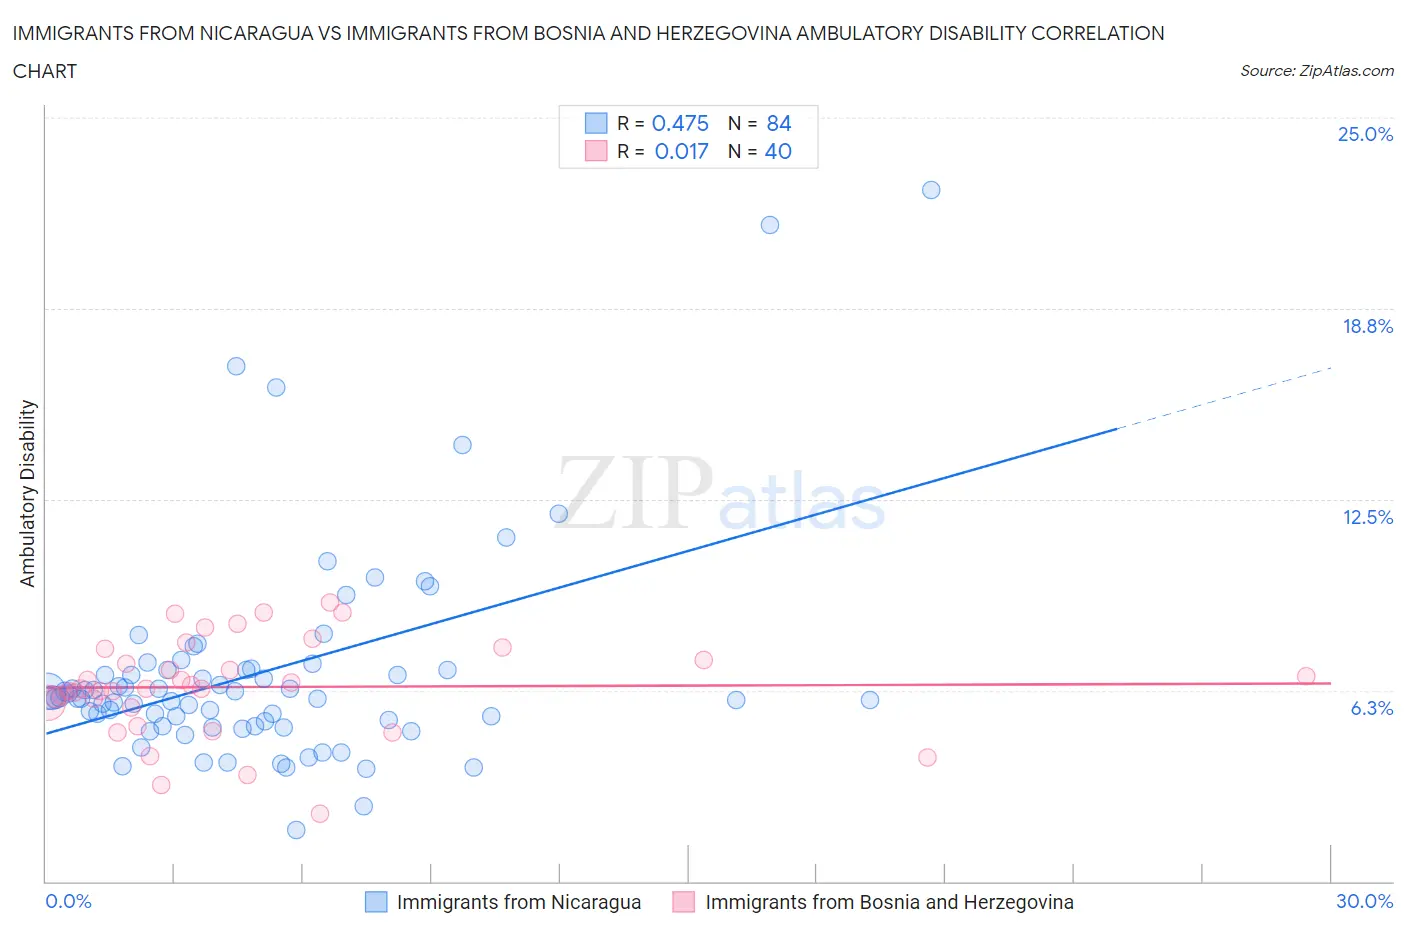 Immigrants from Nicaragua vs Immigrants from Bosnia and Herzegovina Ambulatory Disability